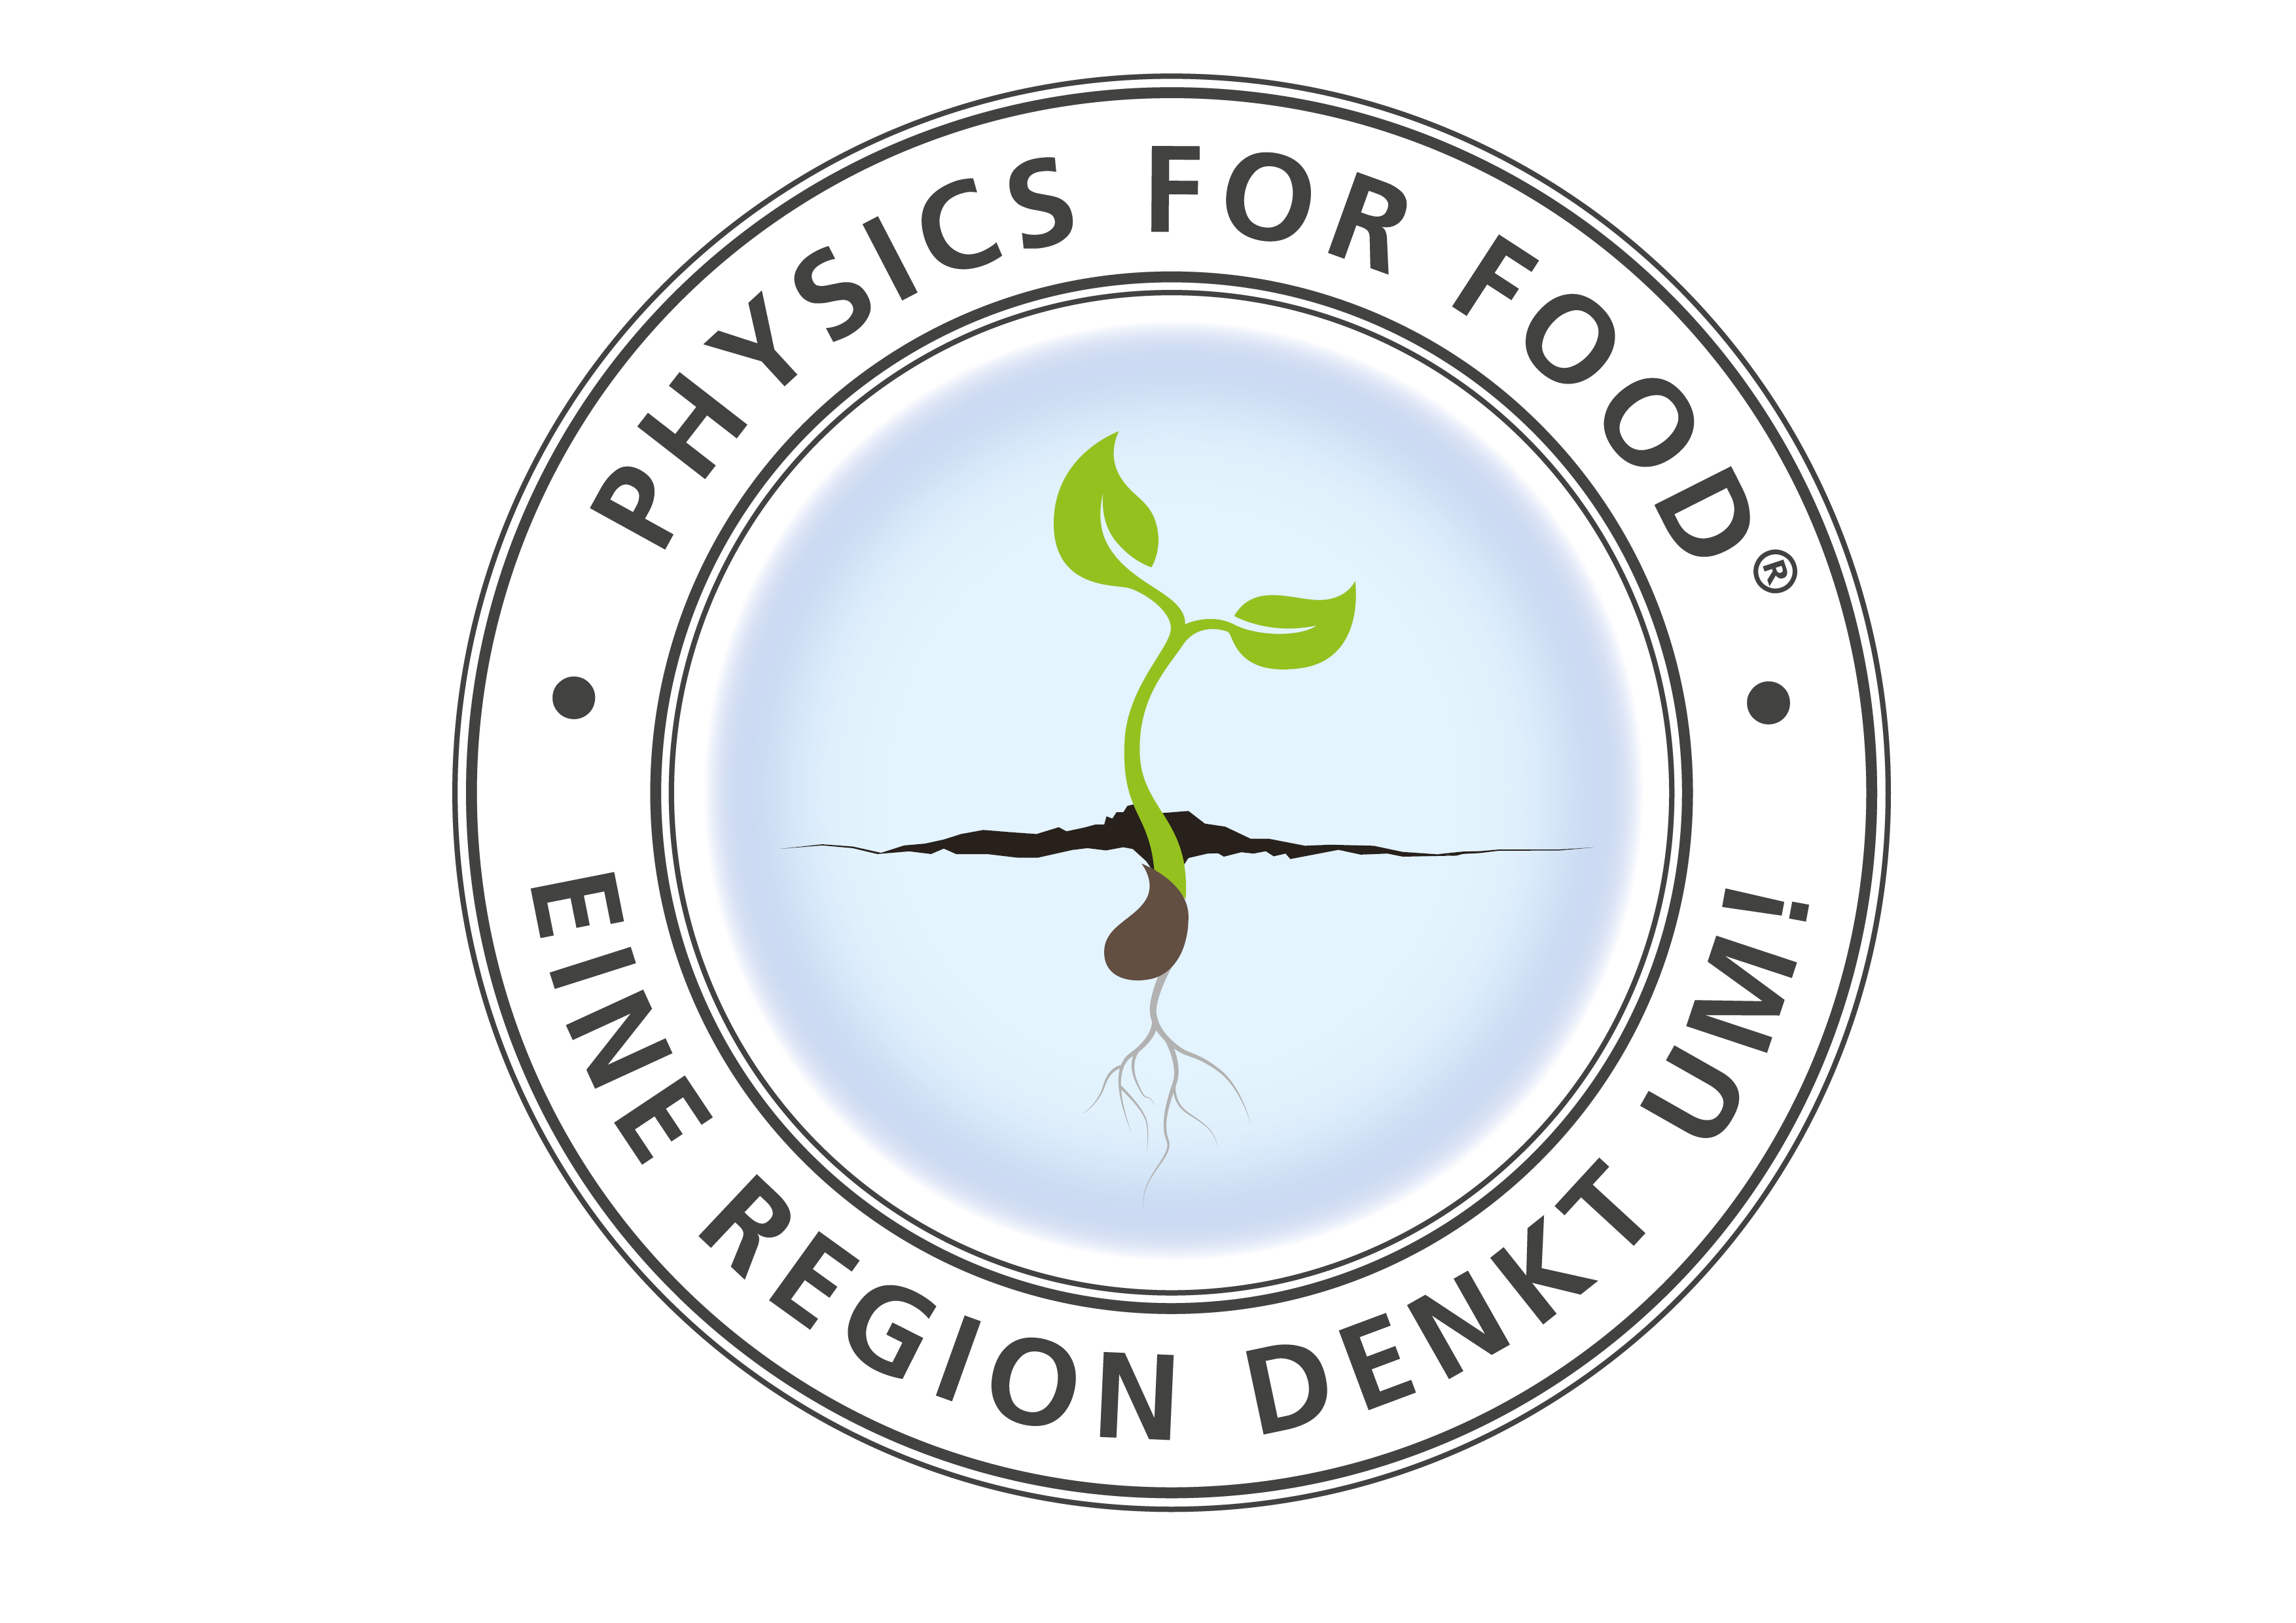 Physics For Food Logo 2